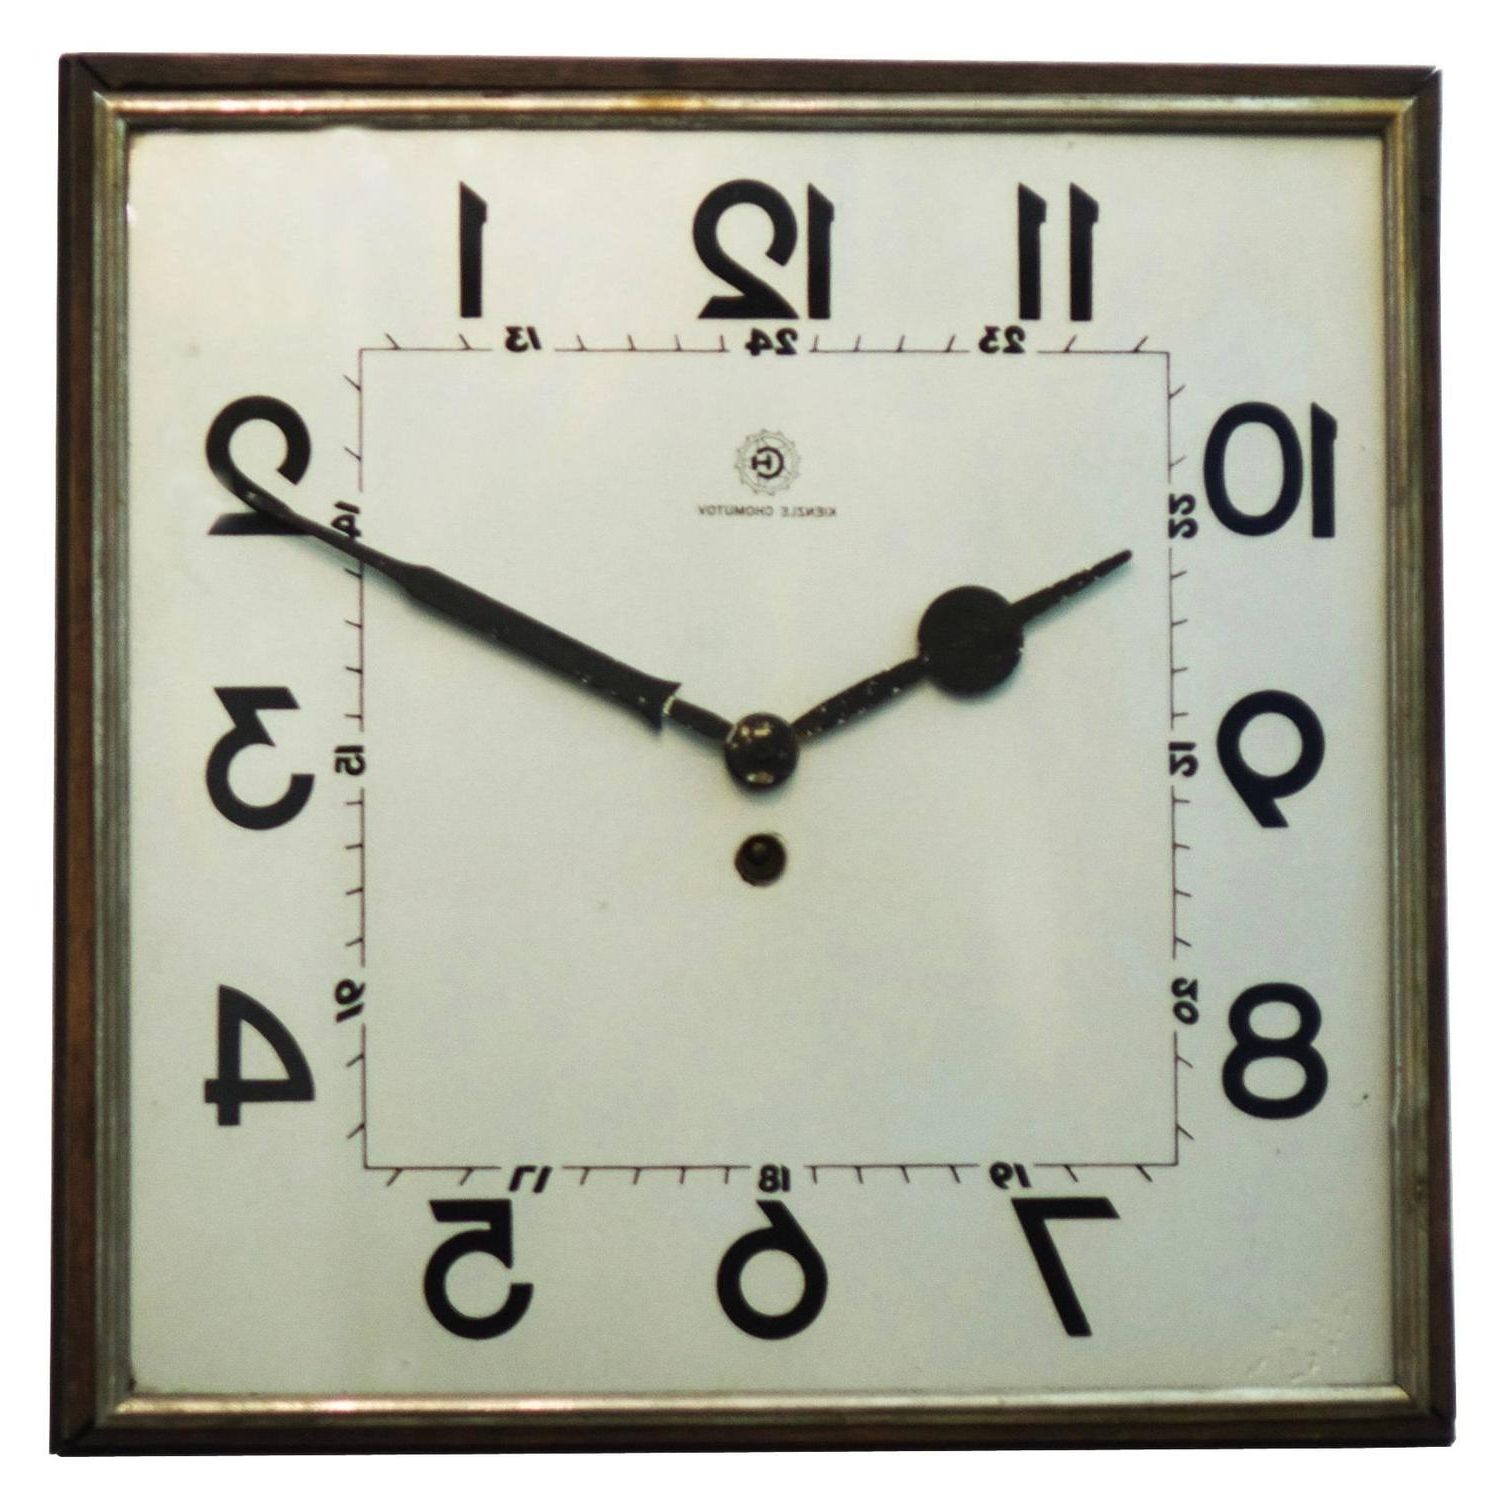 Art Deco Wall Clocks Pertaining To Popular Big Kienzle Bauhaus Wall Clock, 1930s For Sale At 1stdibs (View 2 of 15)